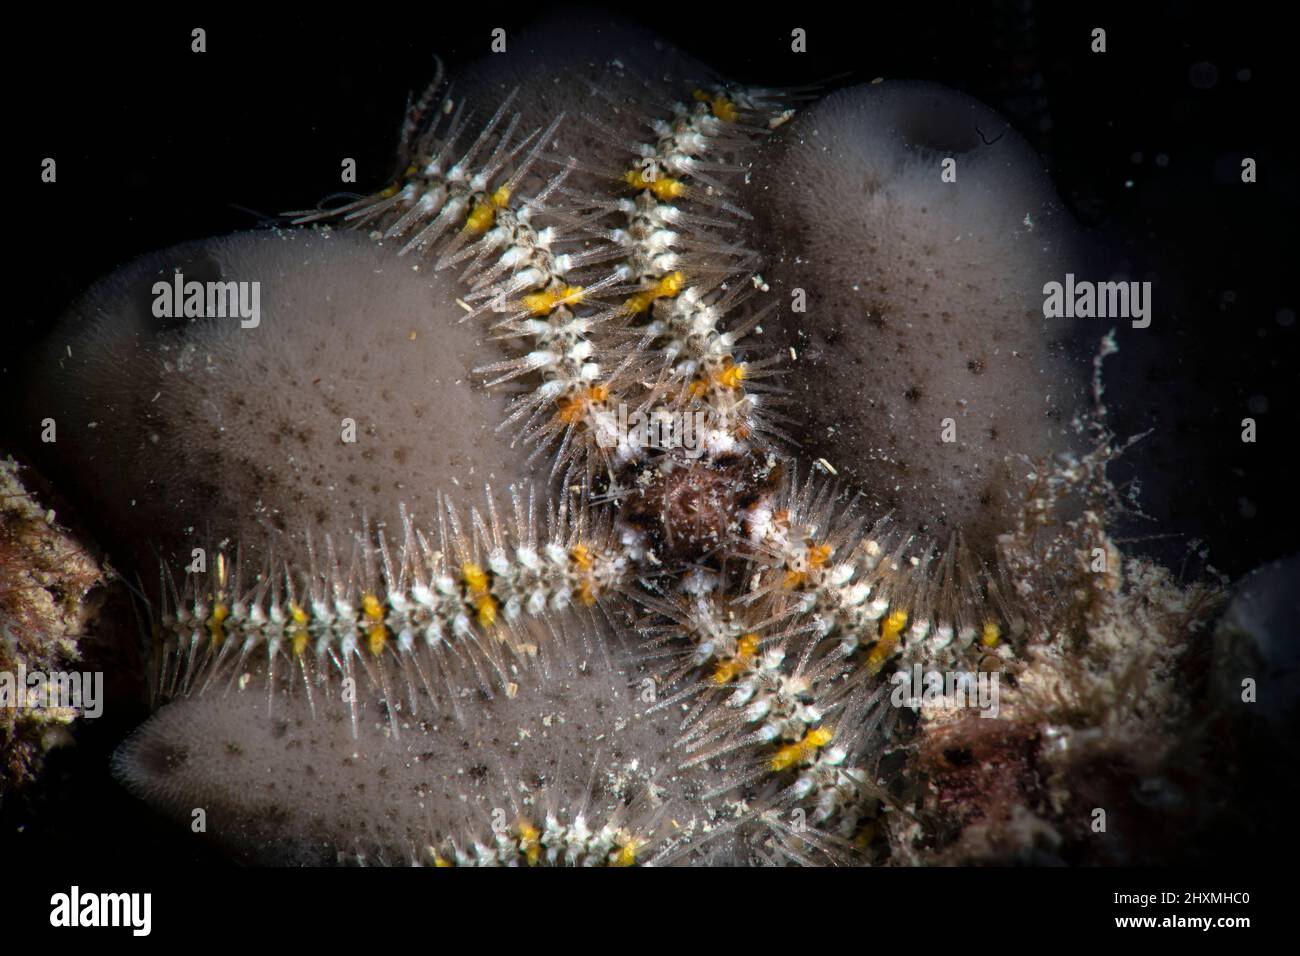 Brittle star on sponge, Numana, Italy Stock Photo